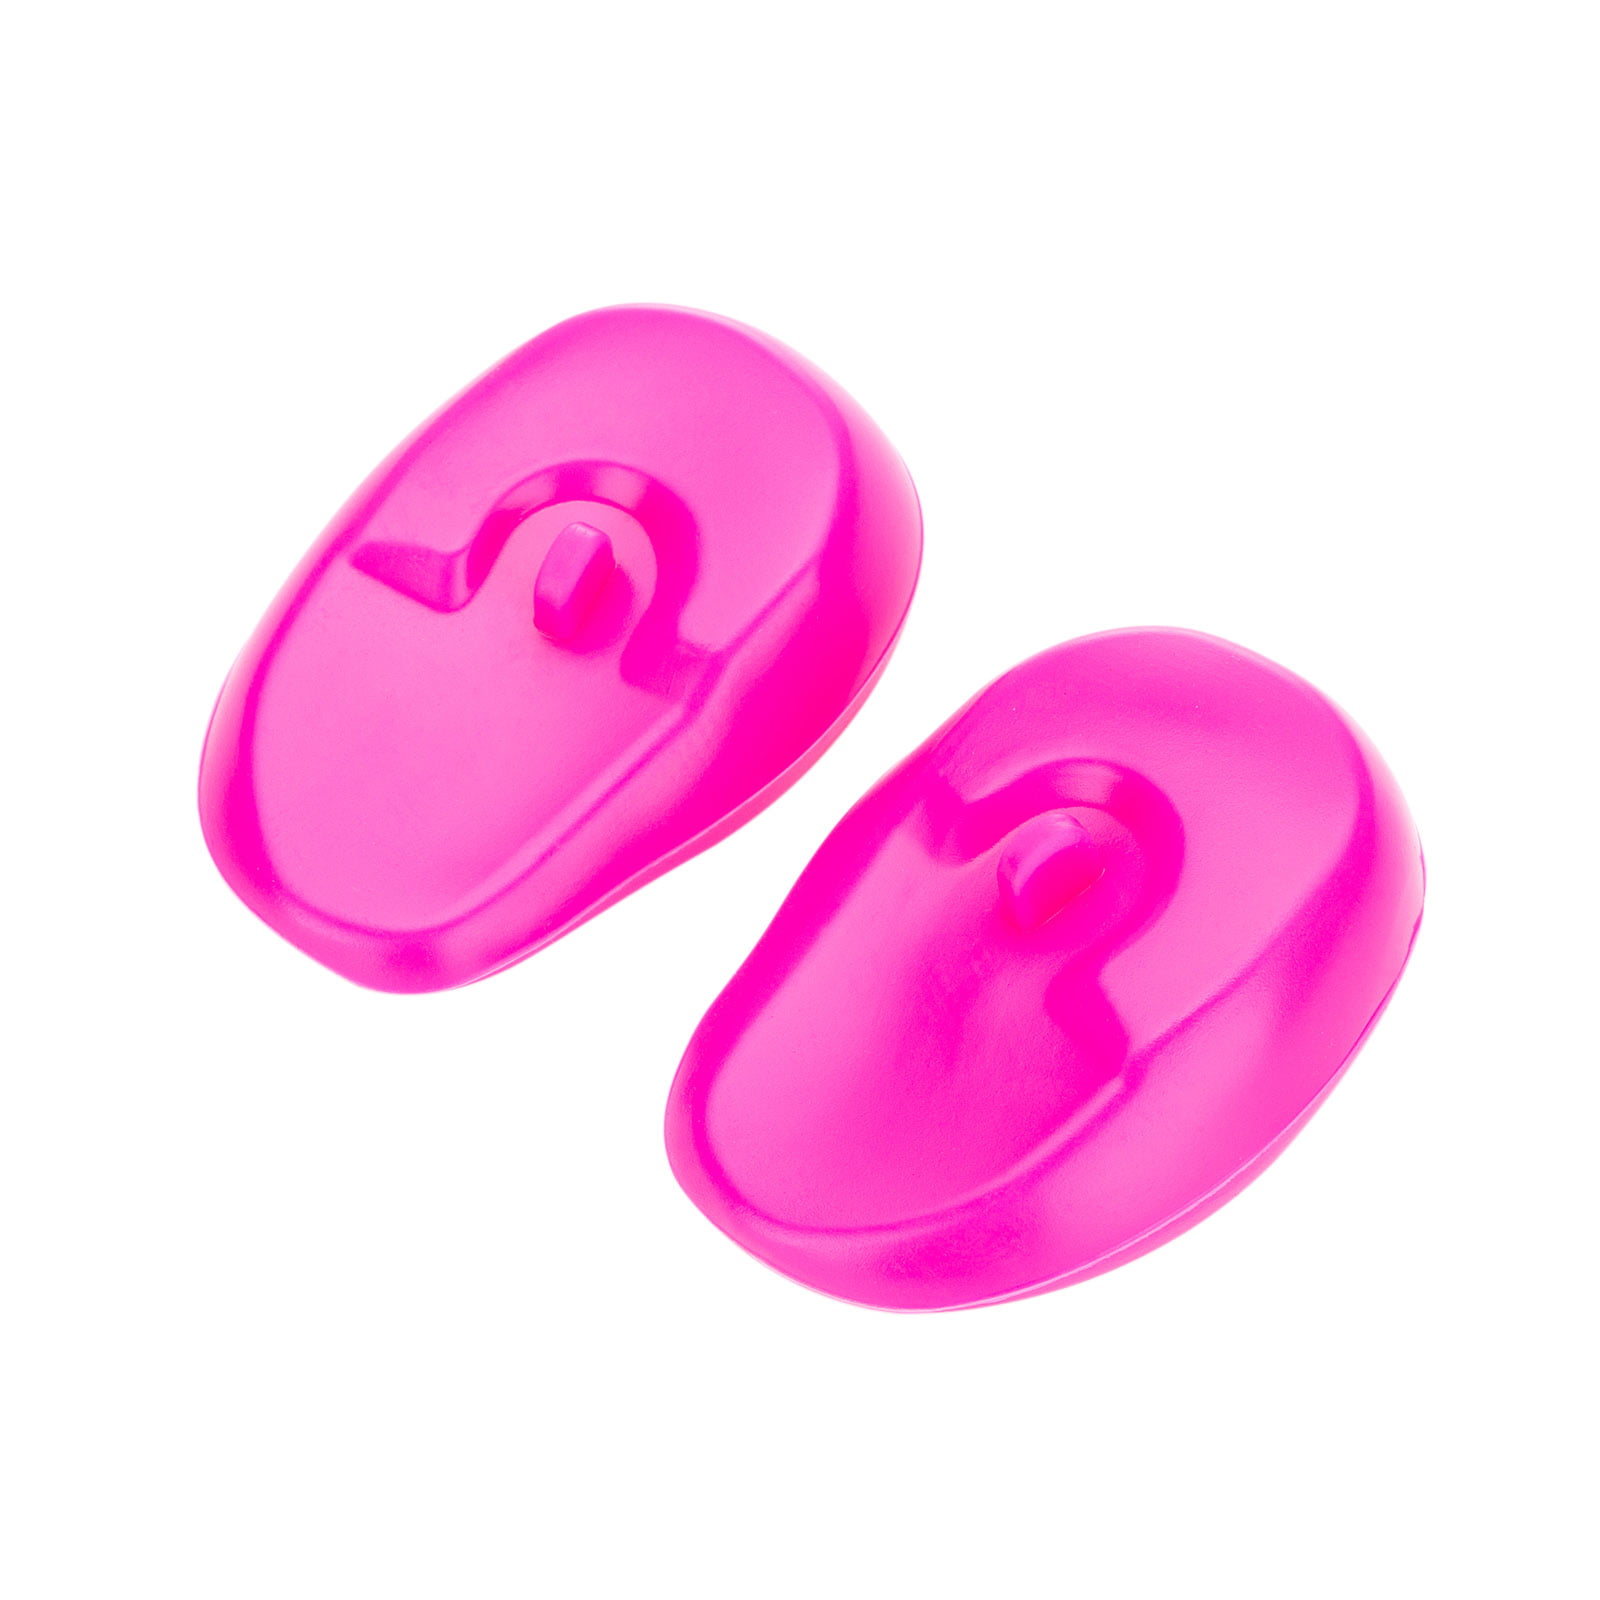 Gwill 100PCS 3.2  Diameter Transparent Disposable Waterproof Plastic Ear Caps Ear Protection Ear Protector Cover Earmuffs for Hair Dye Bath Shower